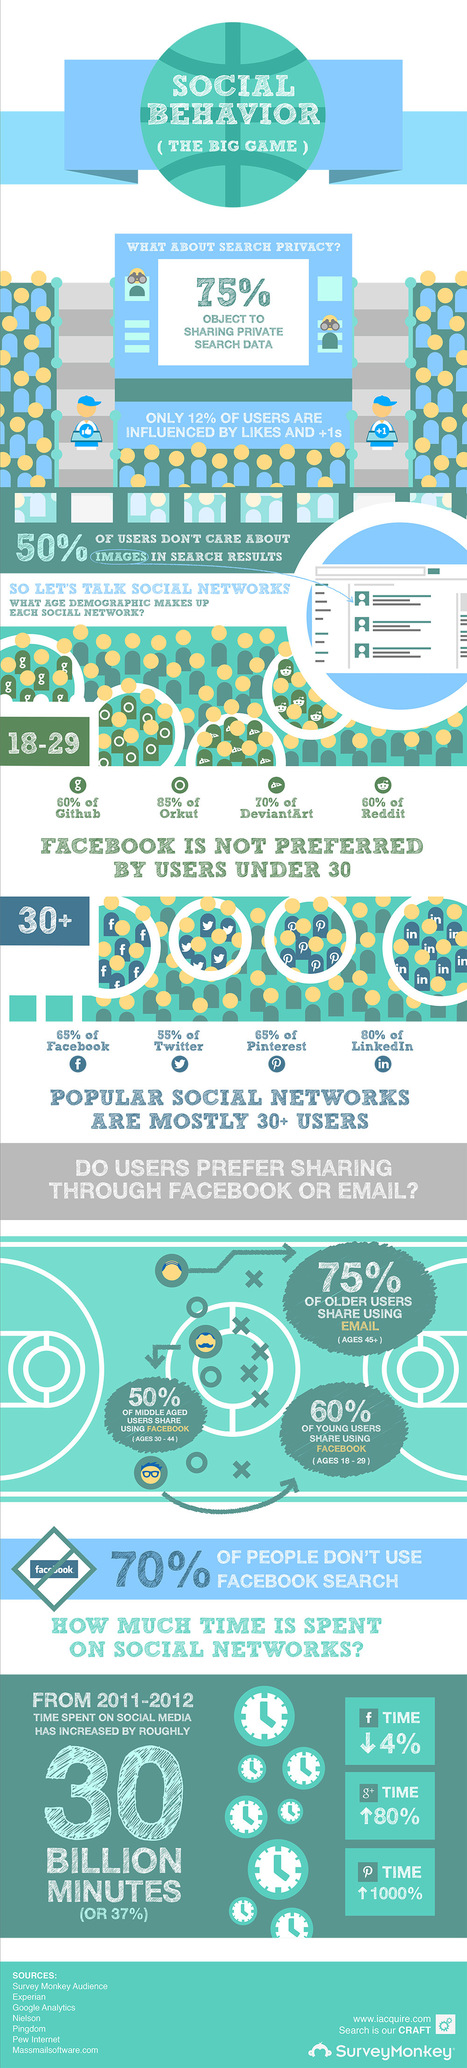 How Are We Using Social Media? [INFOGRAPHIC] | Online tips & social media nieuws | Scoop.it